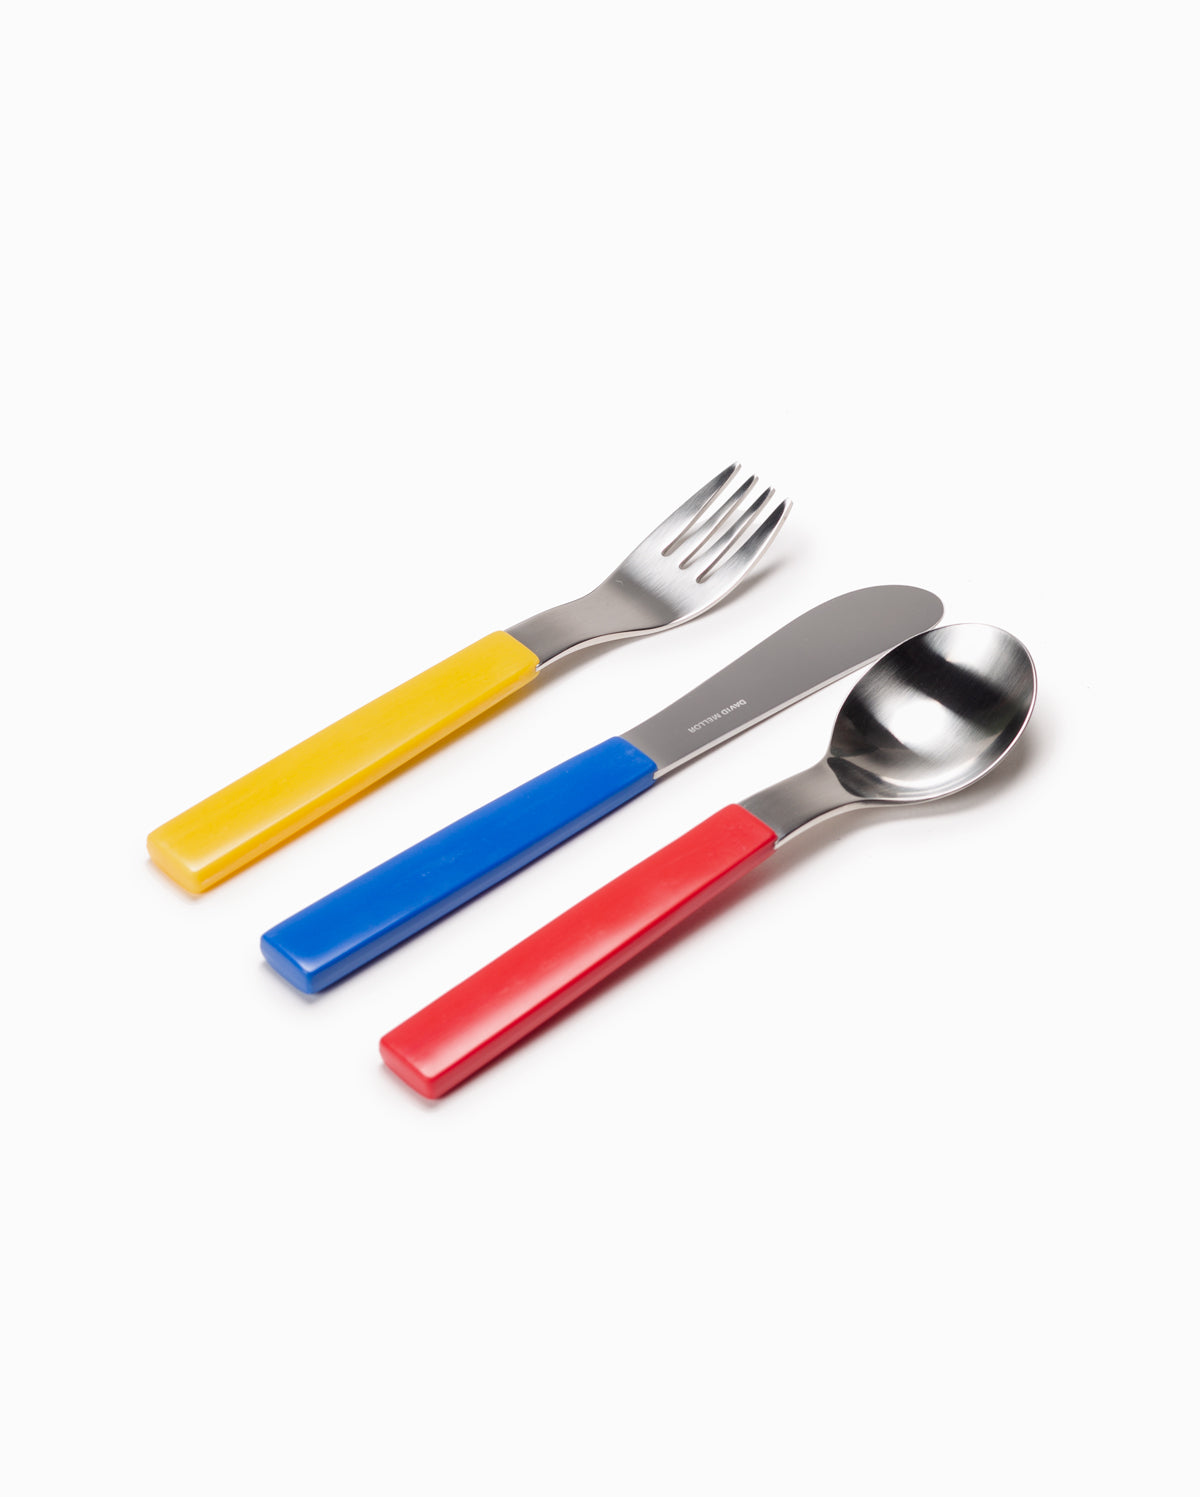 David Mellor - Child's Cutlery Set